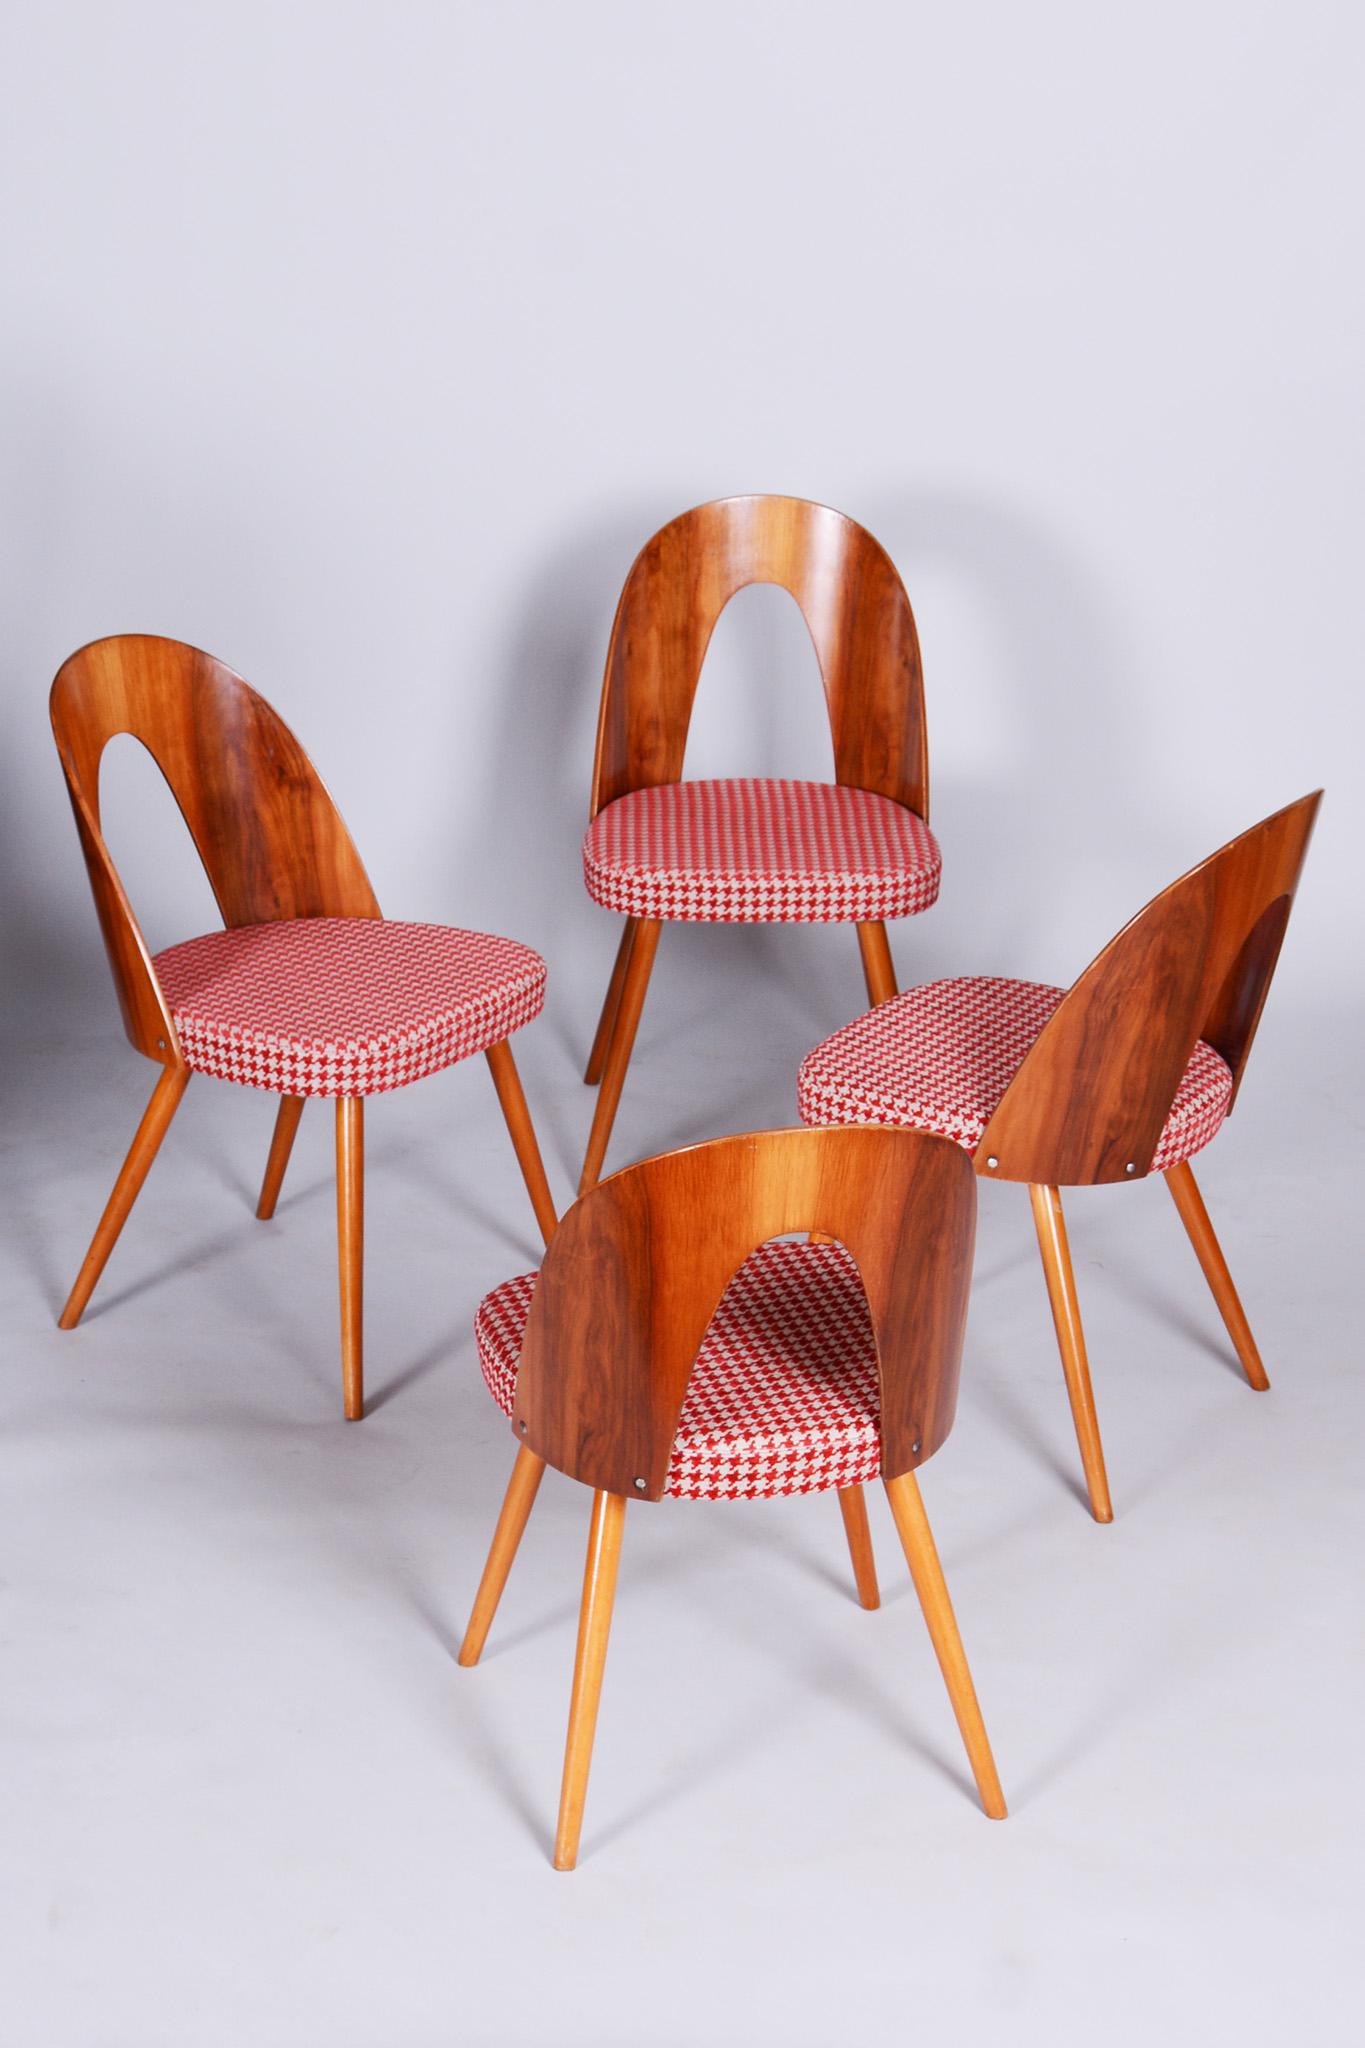 Four Restored Midcentury Chairs, Antonin Suman, Beech, Walnut, Czechia, 1950s For Sale 1